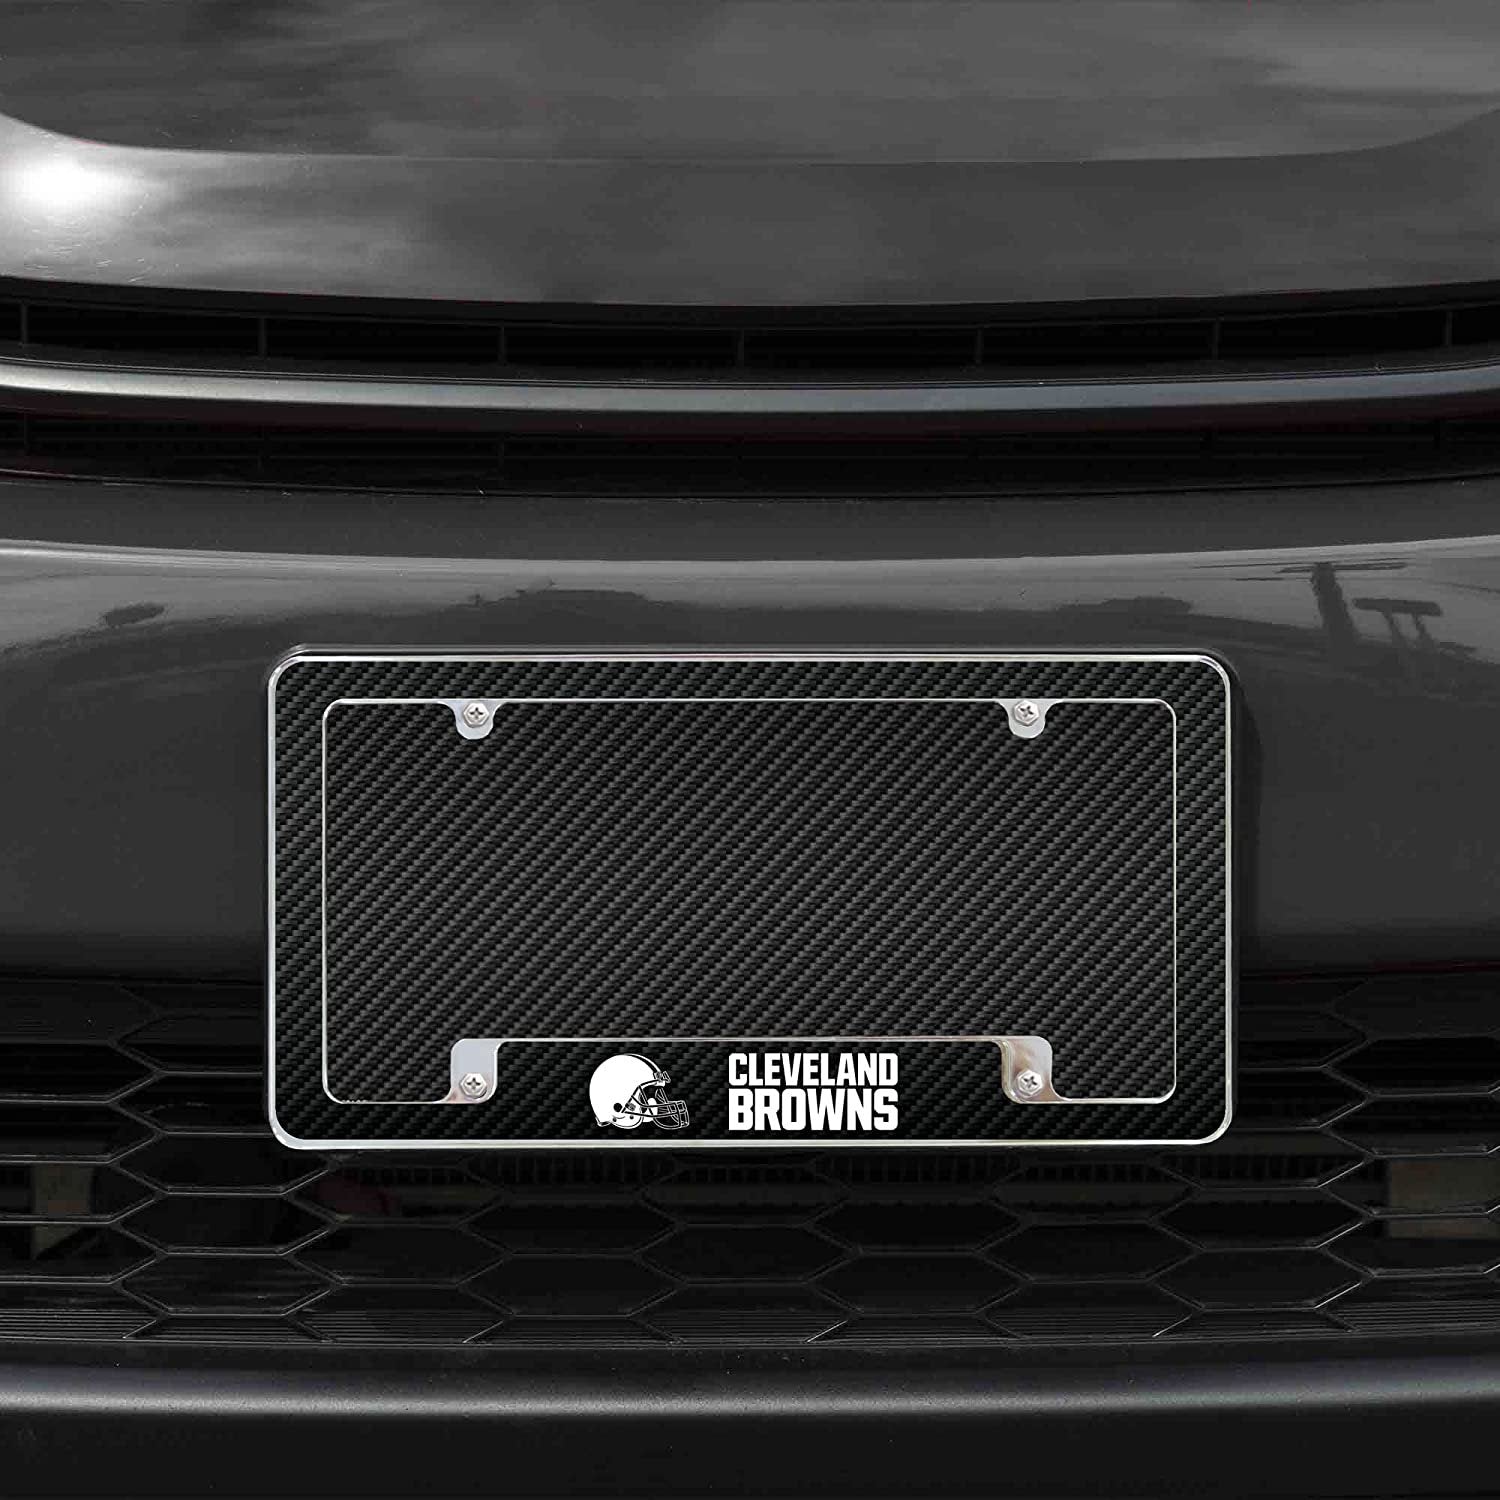 Cleveland Browns Metal License Plate Frame Tag Cover Carbon Fiber Design 12x6 Inch